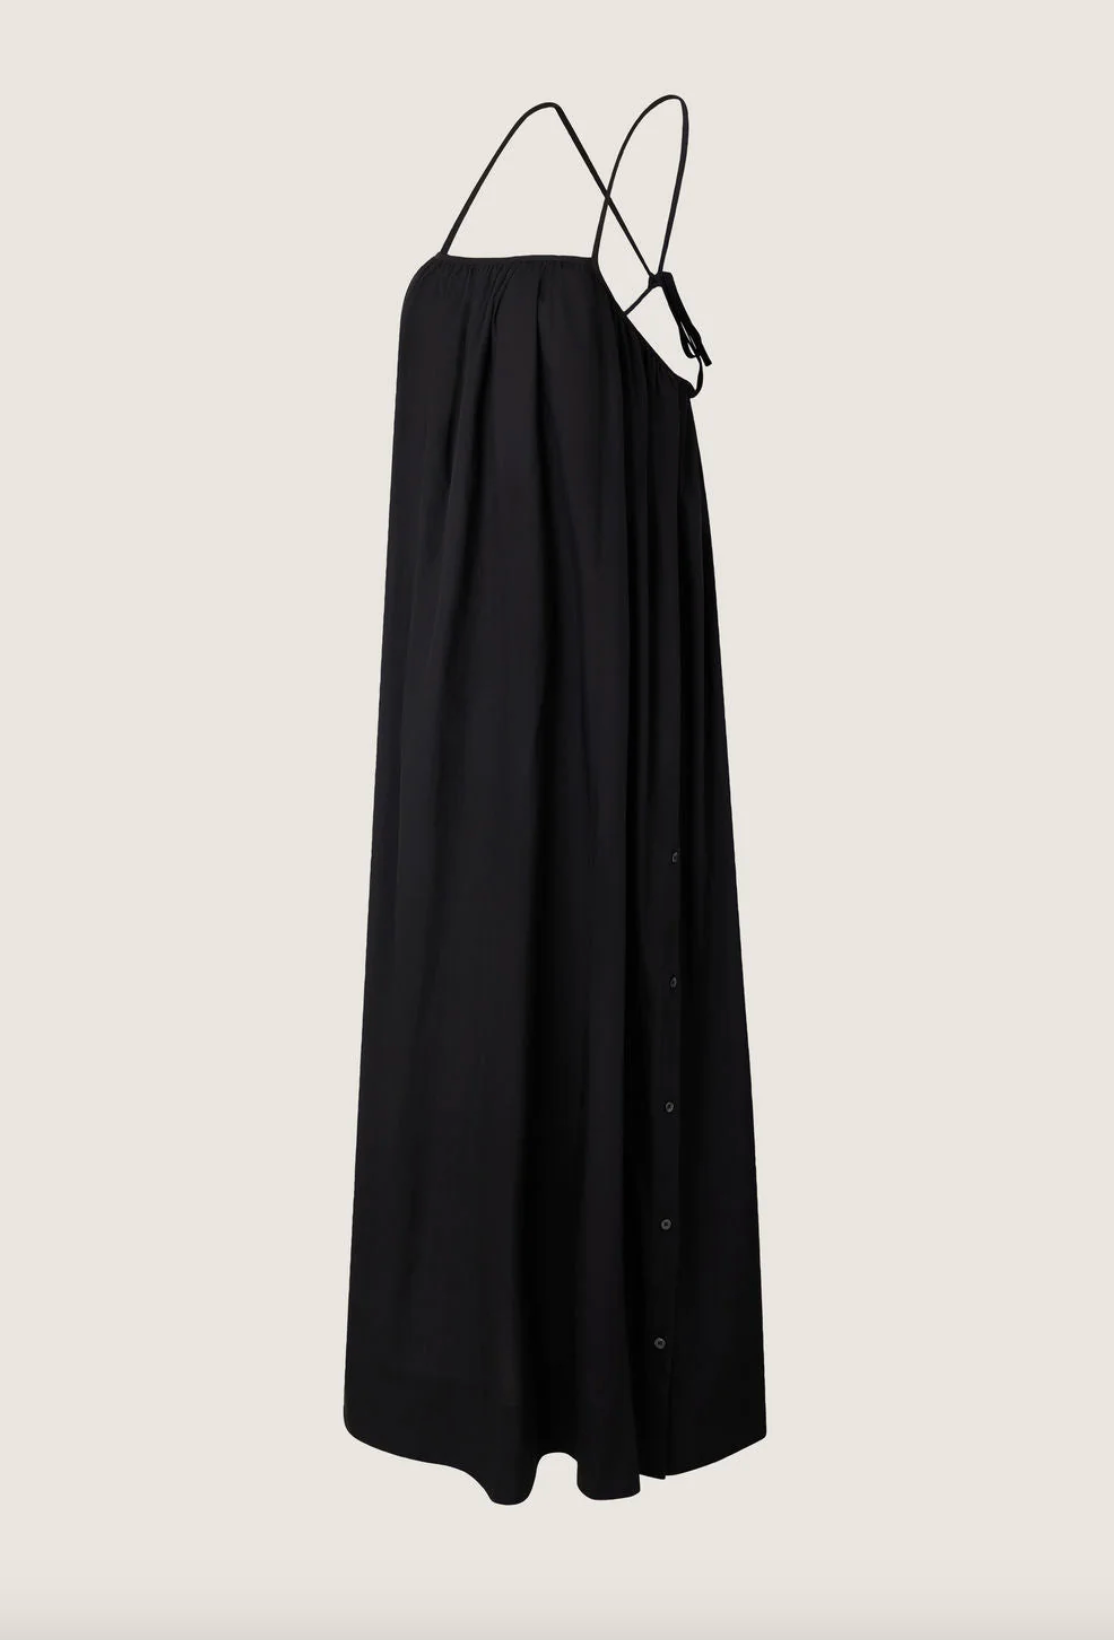 Soeur - Arielle Black Maxi Dress - Image 5 of 7